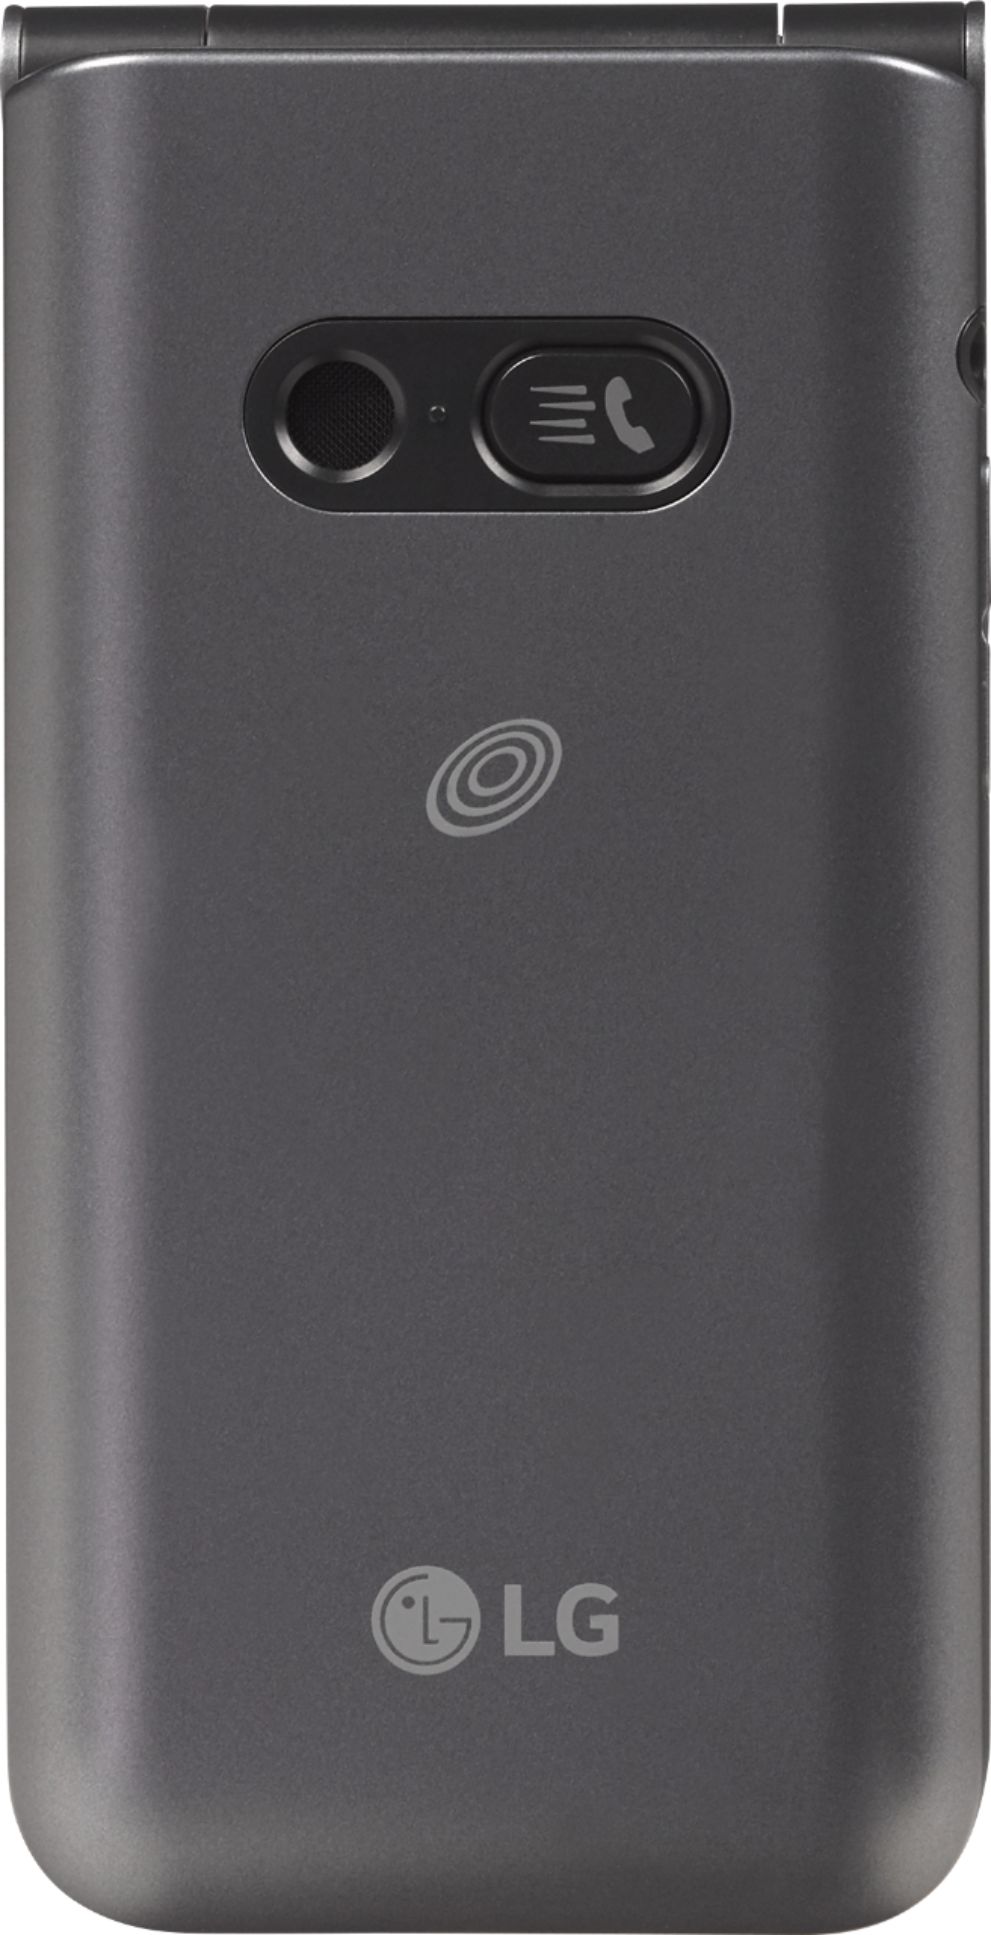 Back View: Tracfone Carrier-Locked LG Classic Flip 4G LTE Prepaid Flip Phone- Black - 4GB - CDMA, TFLGL125DCP